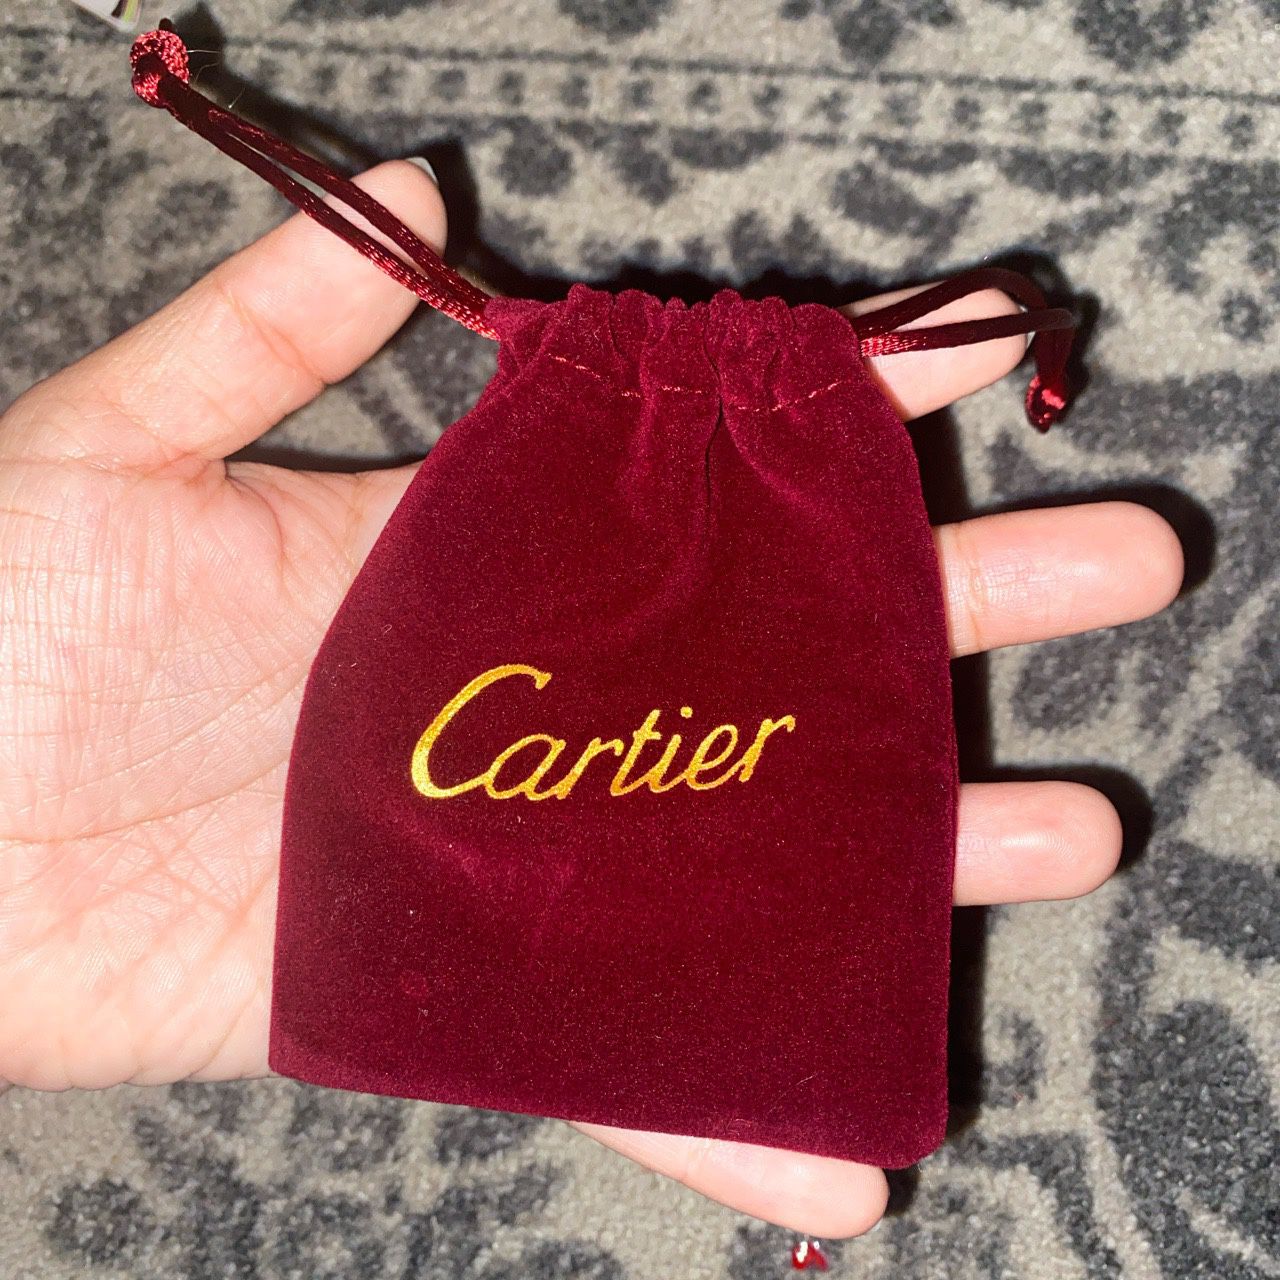 Cartier Dust Bag for Sale in Fort Lauderdale, FL - OfferUp